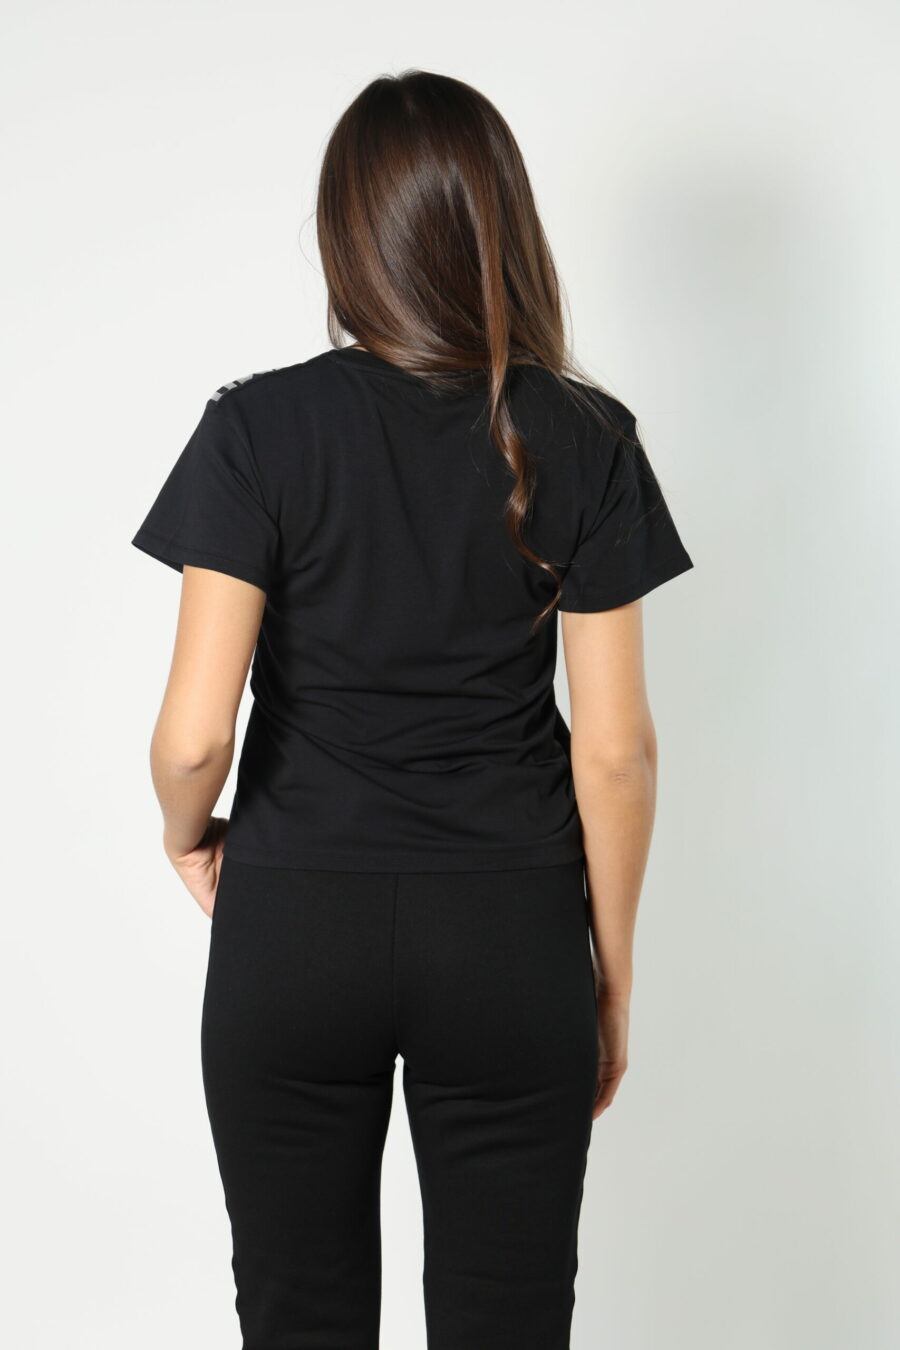 Black T-shirt with v-neck and monochrome ribbon logo - 8052865435499 460 scaled